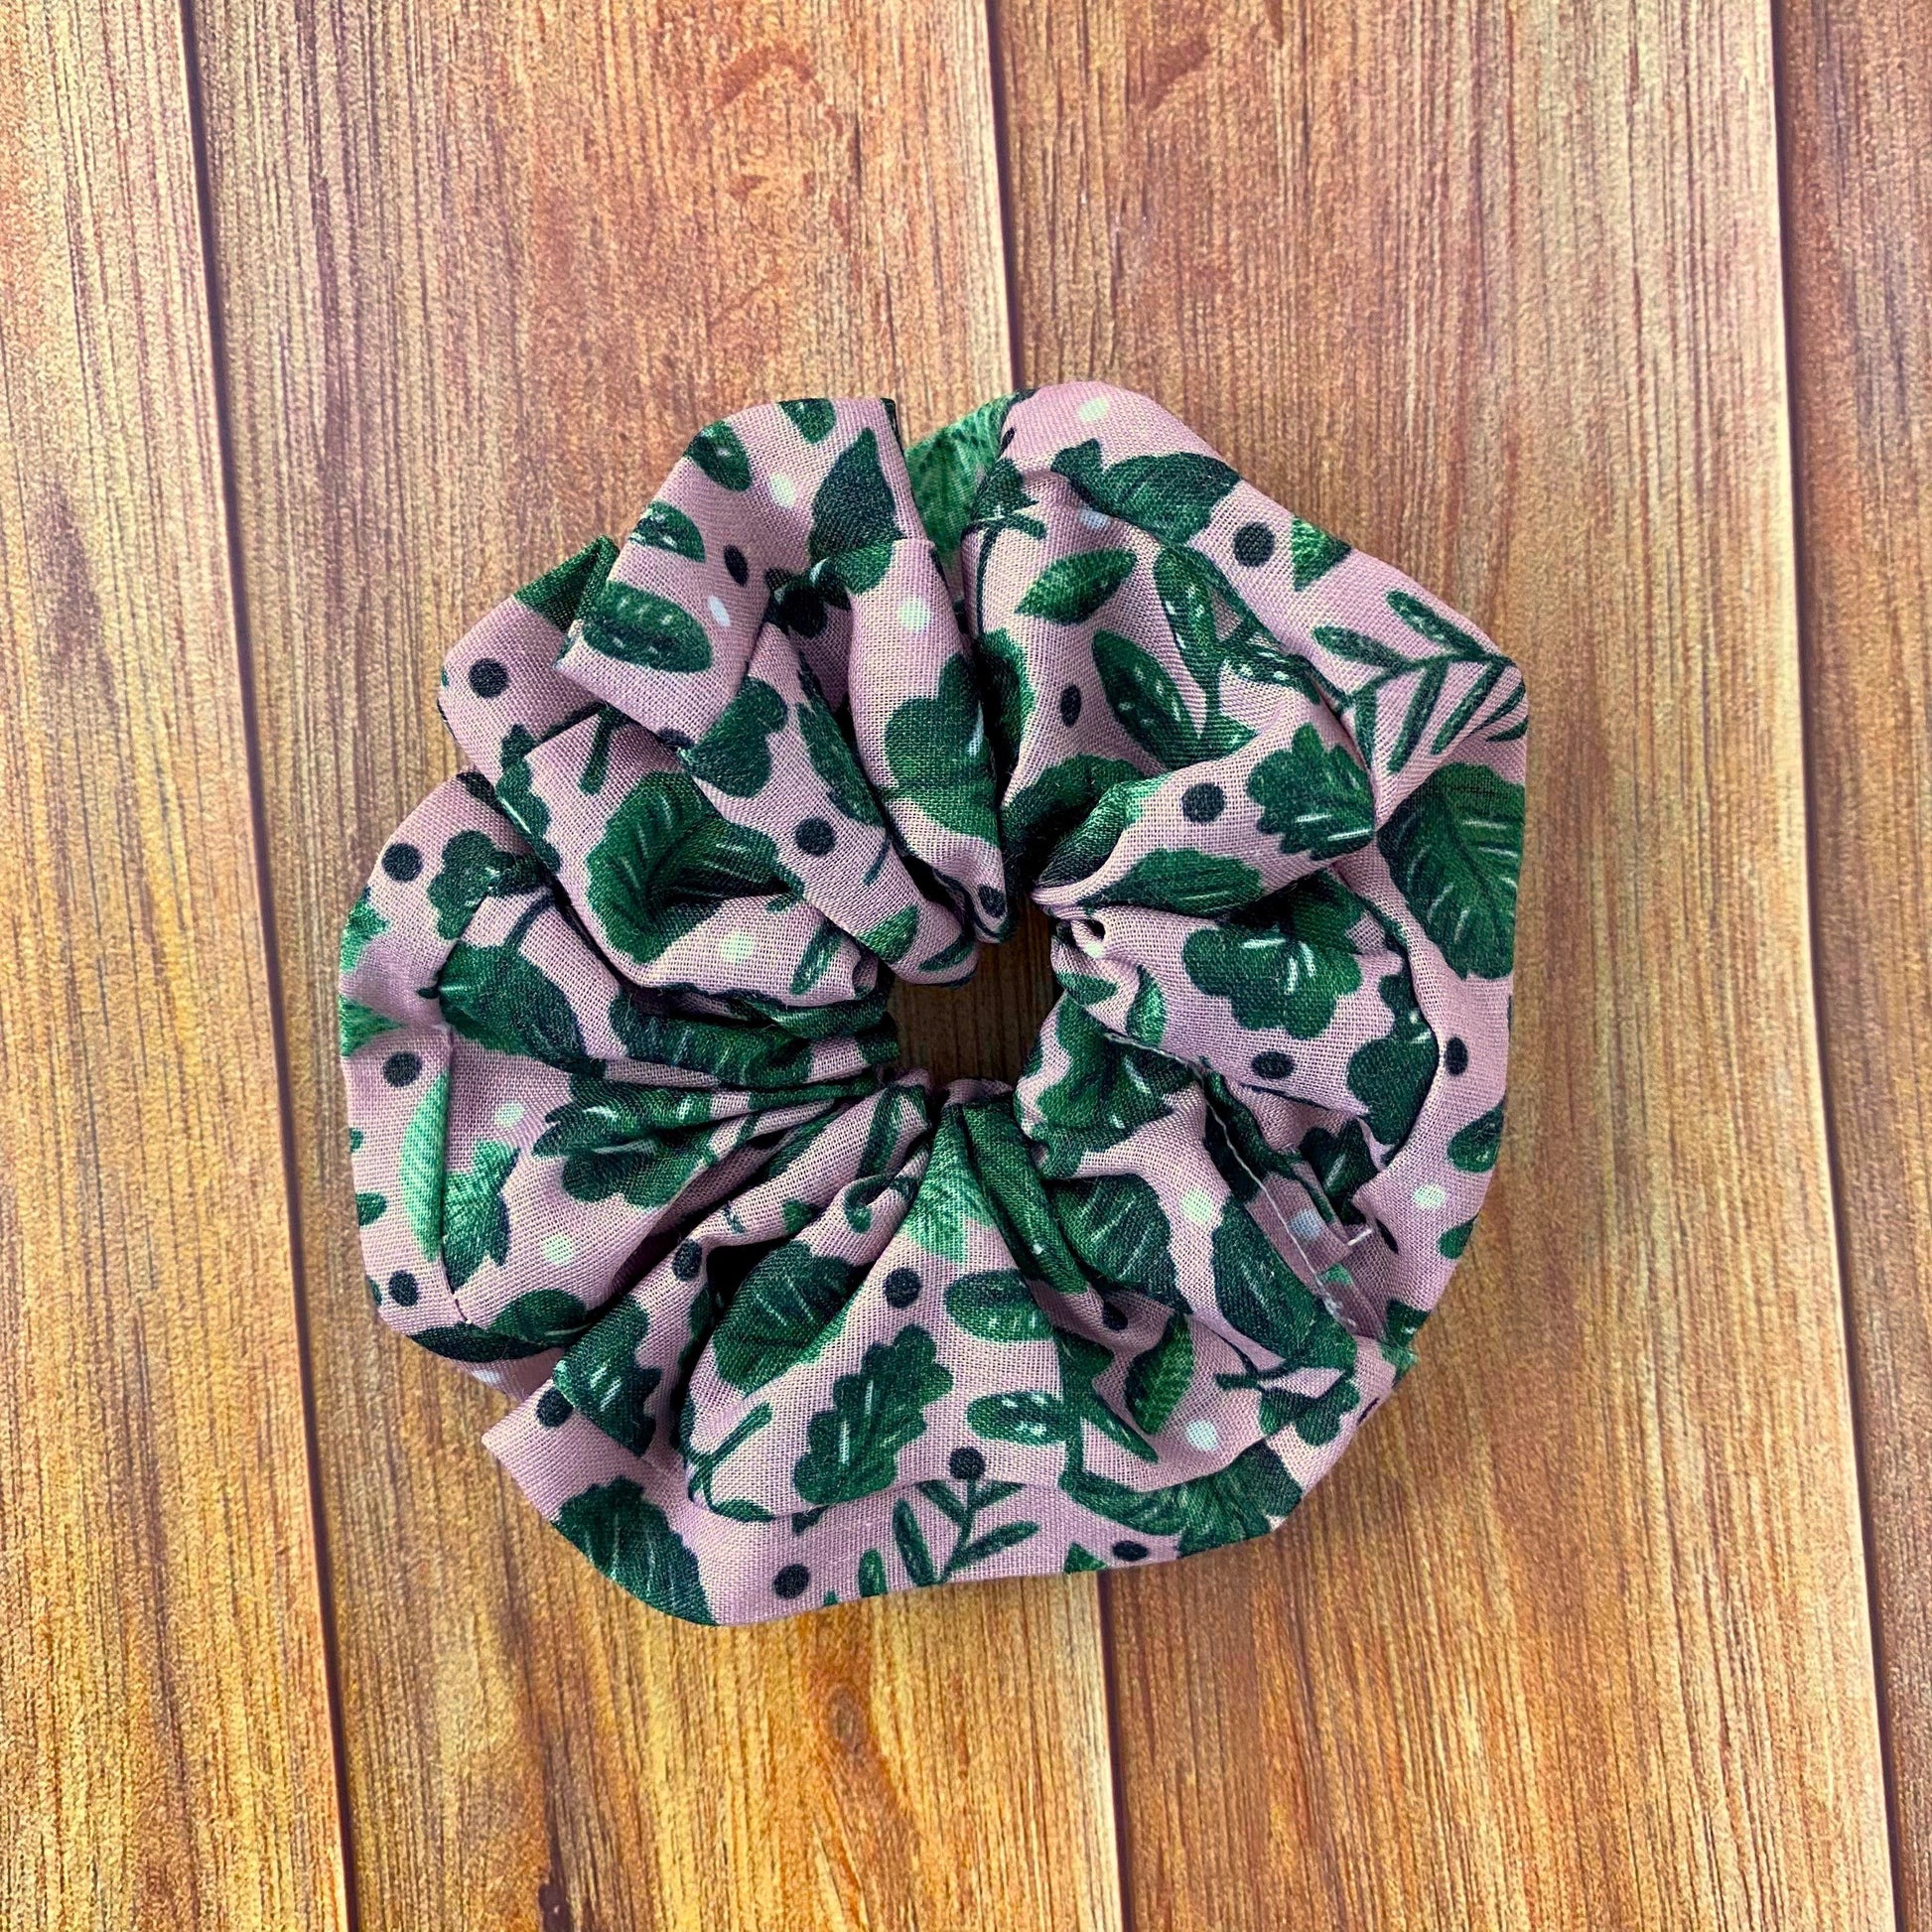 green foliage patterned scrunchie on wooden backdrop